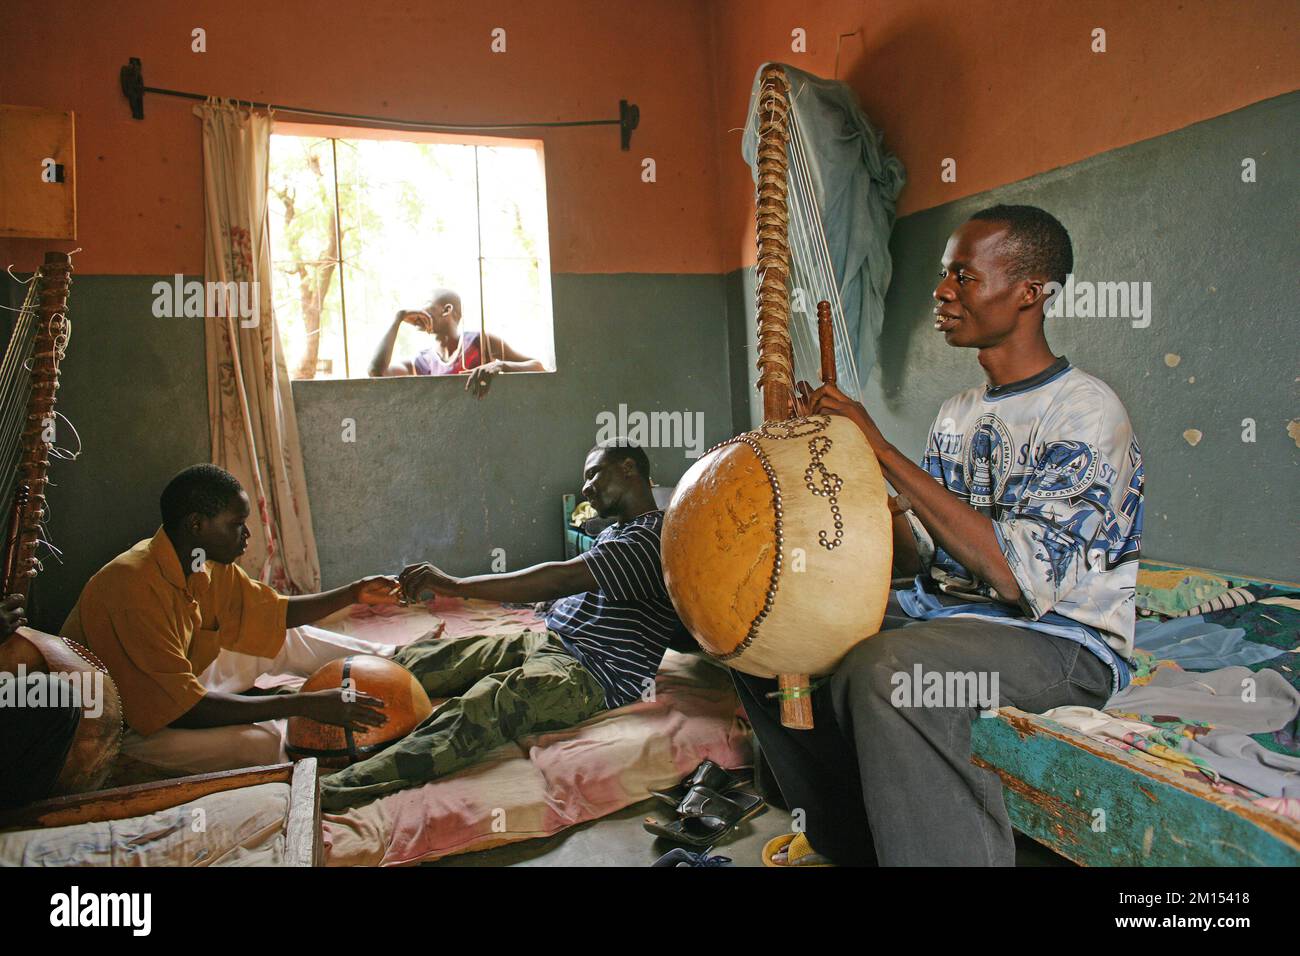 The students of Toumani Diabate the Malian World Musician in Bamako,Mali, West Africa. Stock Photo